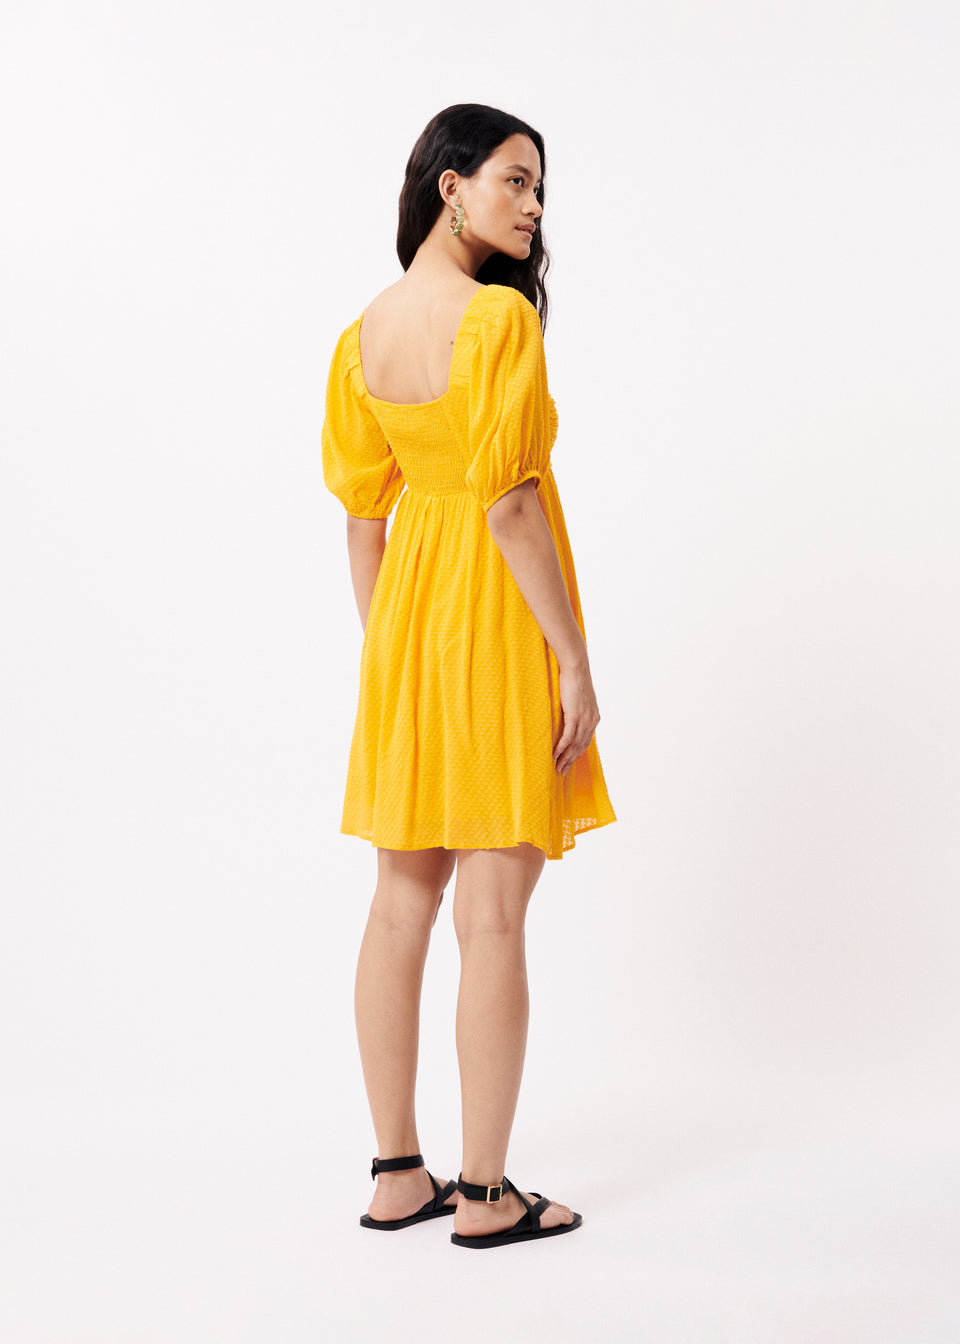 FRNCH "Emy" Dress- Mangue (Marigold)